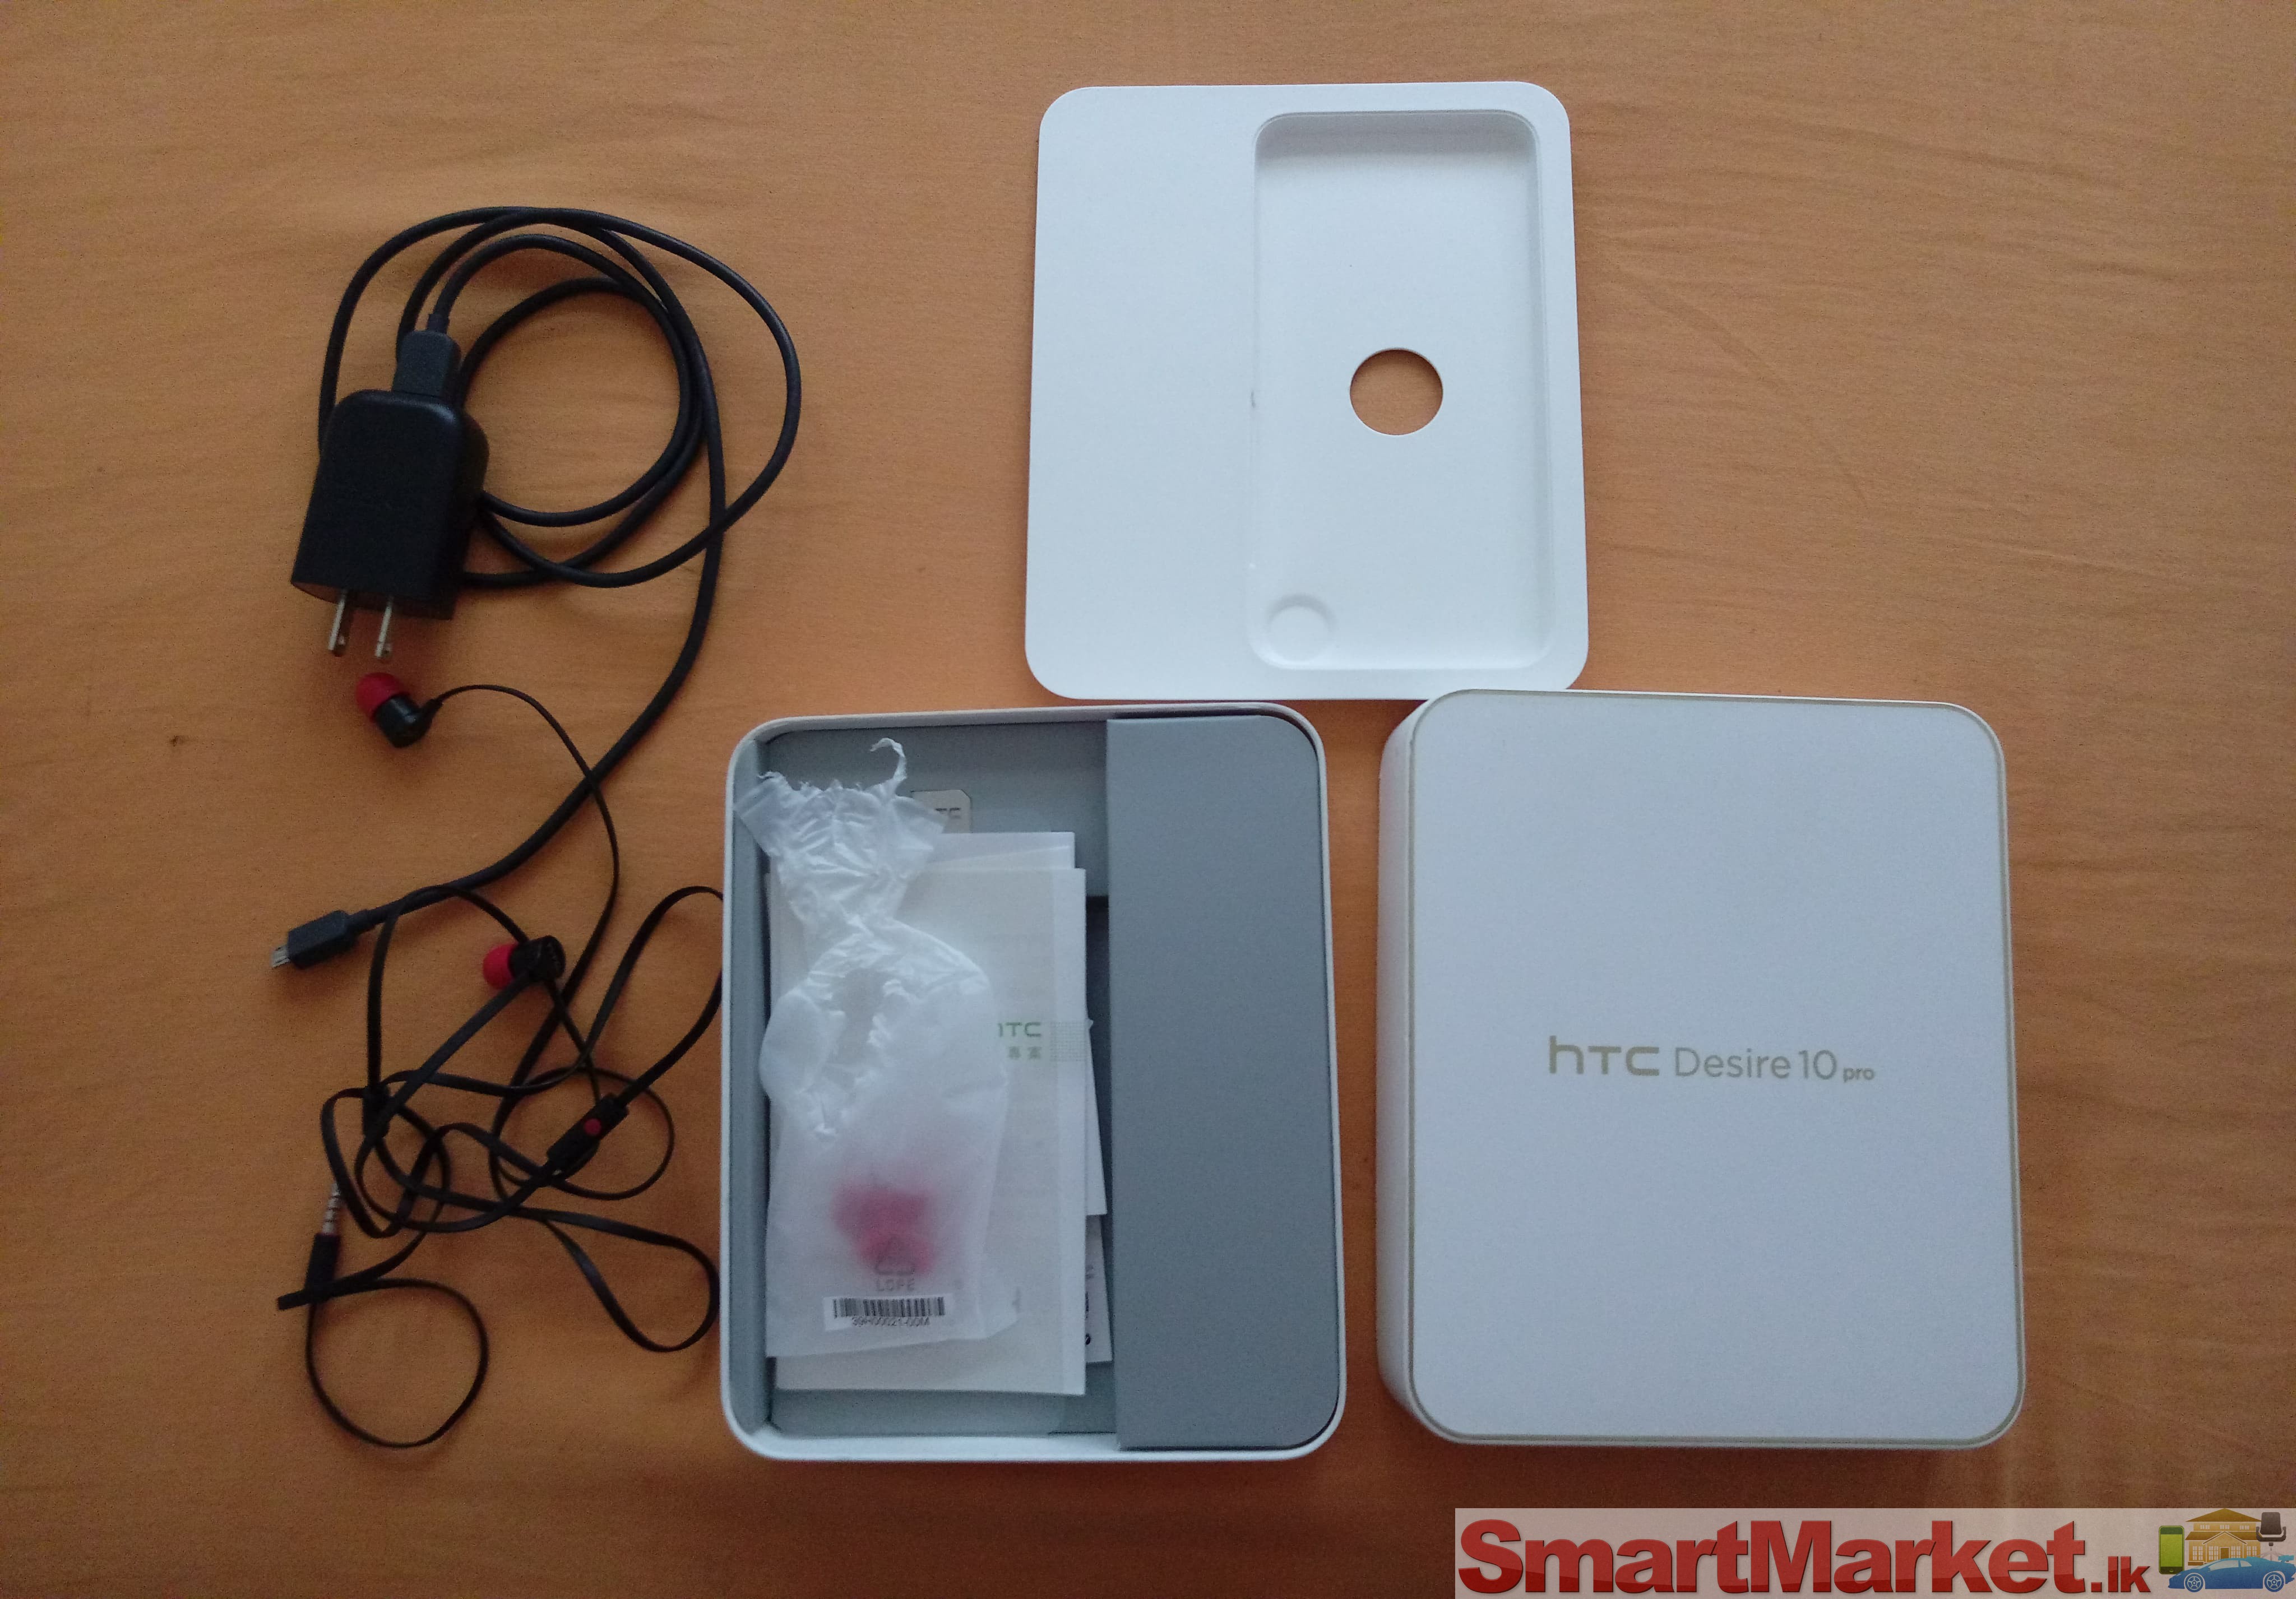 HTC DESIRE 10 PRO